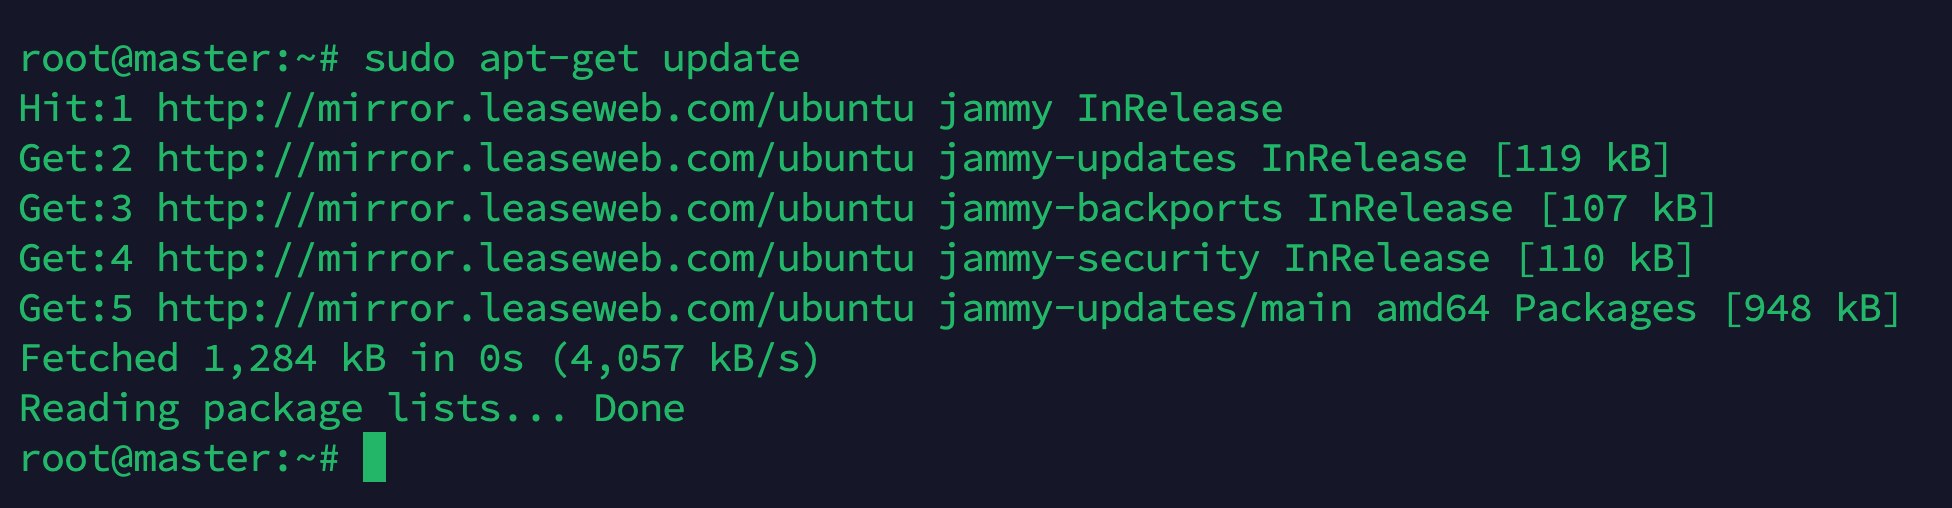 Ubuntu update command line for docker swarm